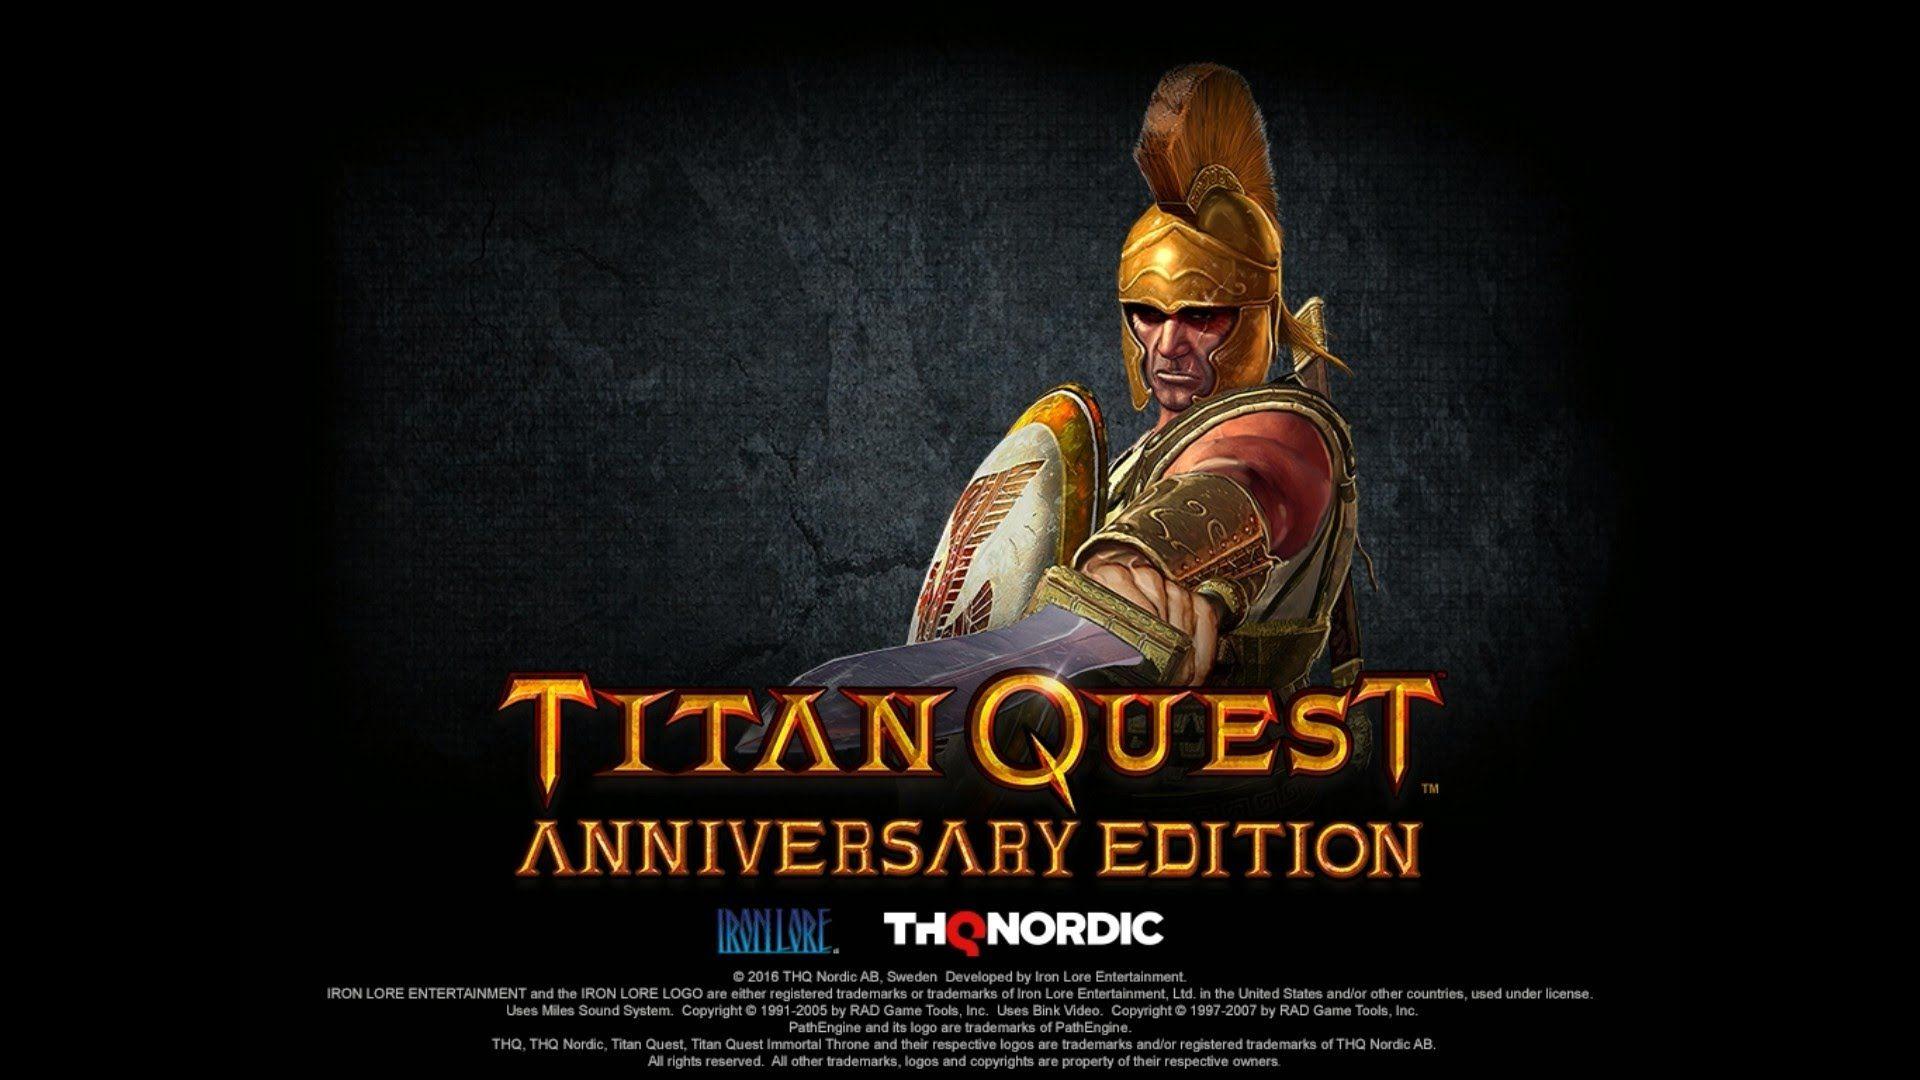 instal the last version for windows Titan Quest Anniversary Edition